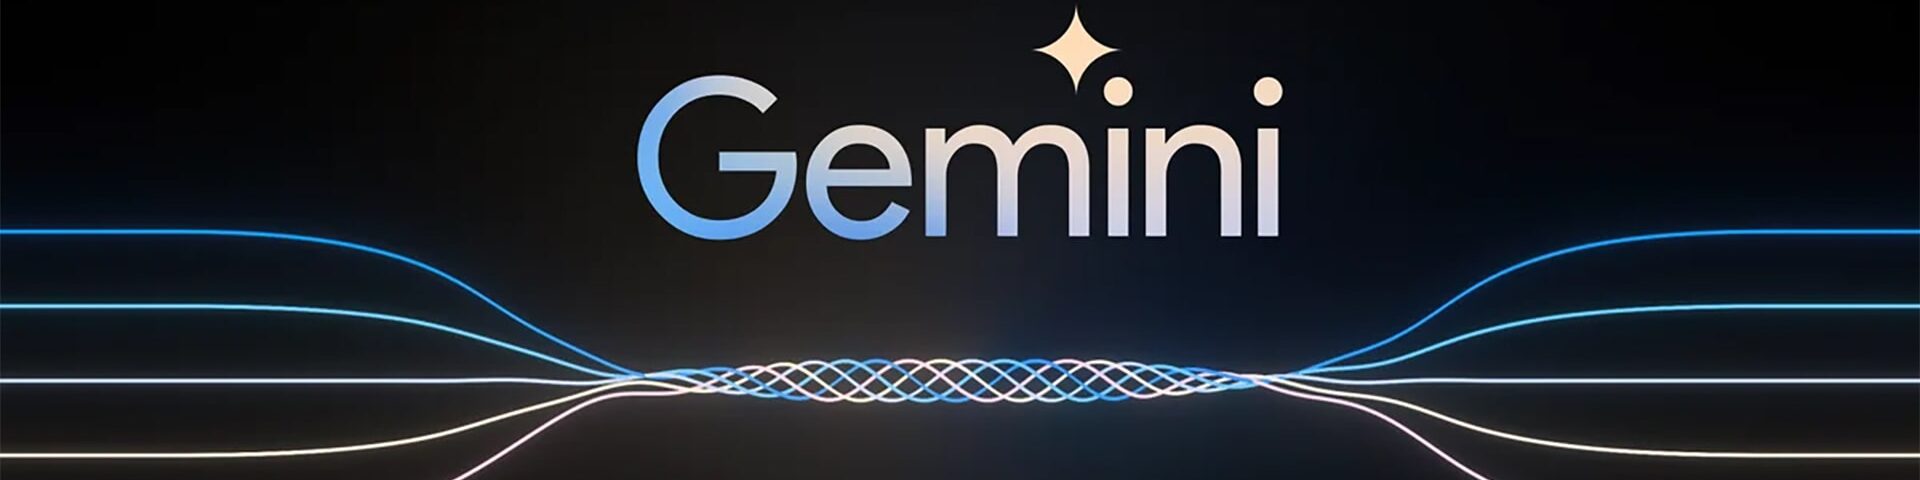 Bard-is-now-Gemini